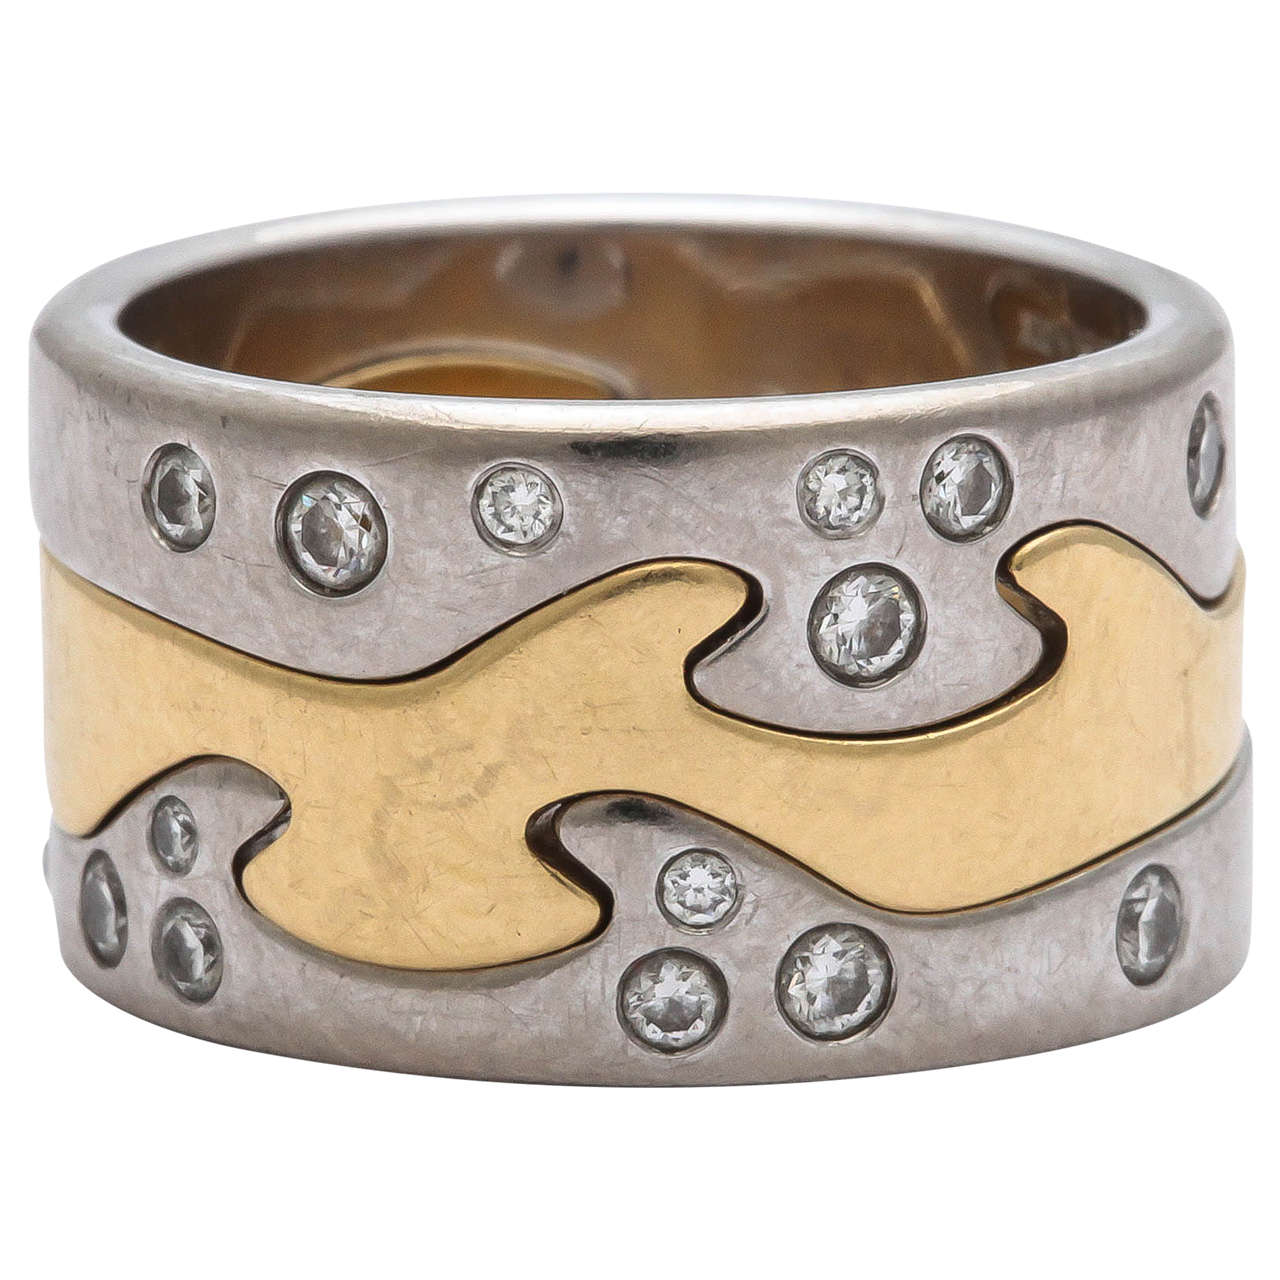 Georg Jensen by Nina Koppel Diamond Gold Fusion Ring For Sale at 1stDibs |  georg jensen fusion ring sale, georg jensen sale, georg jensen puzzle ring